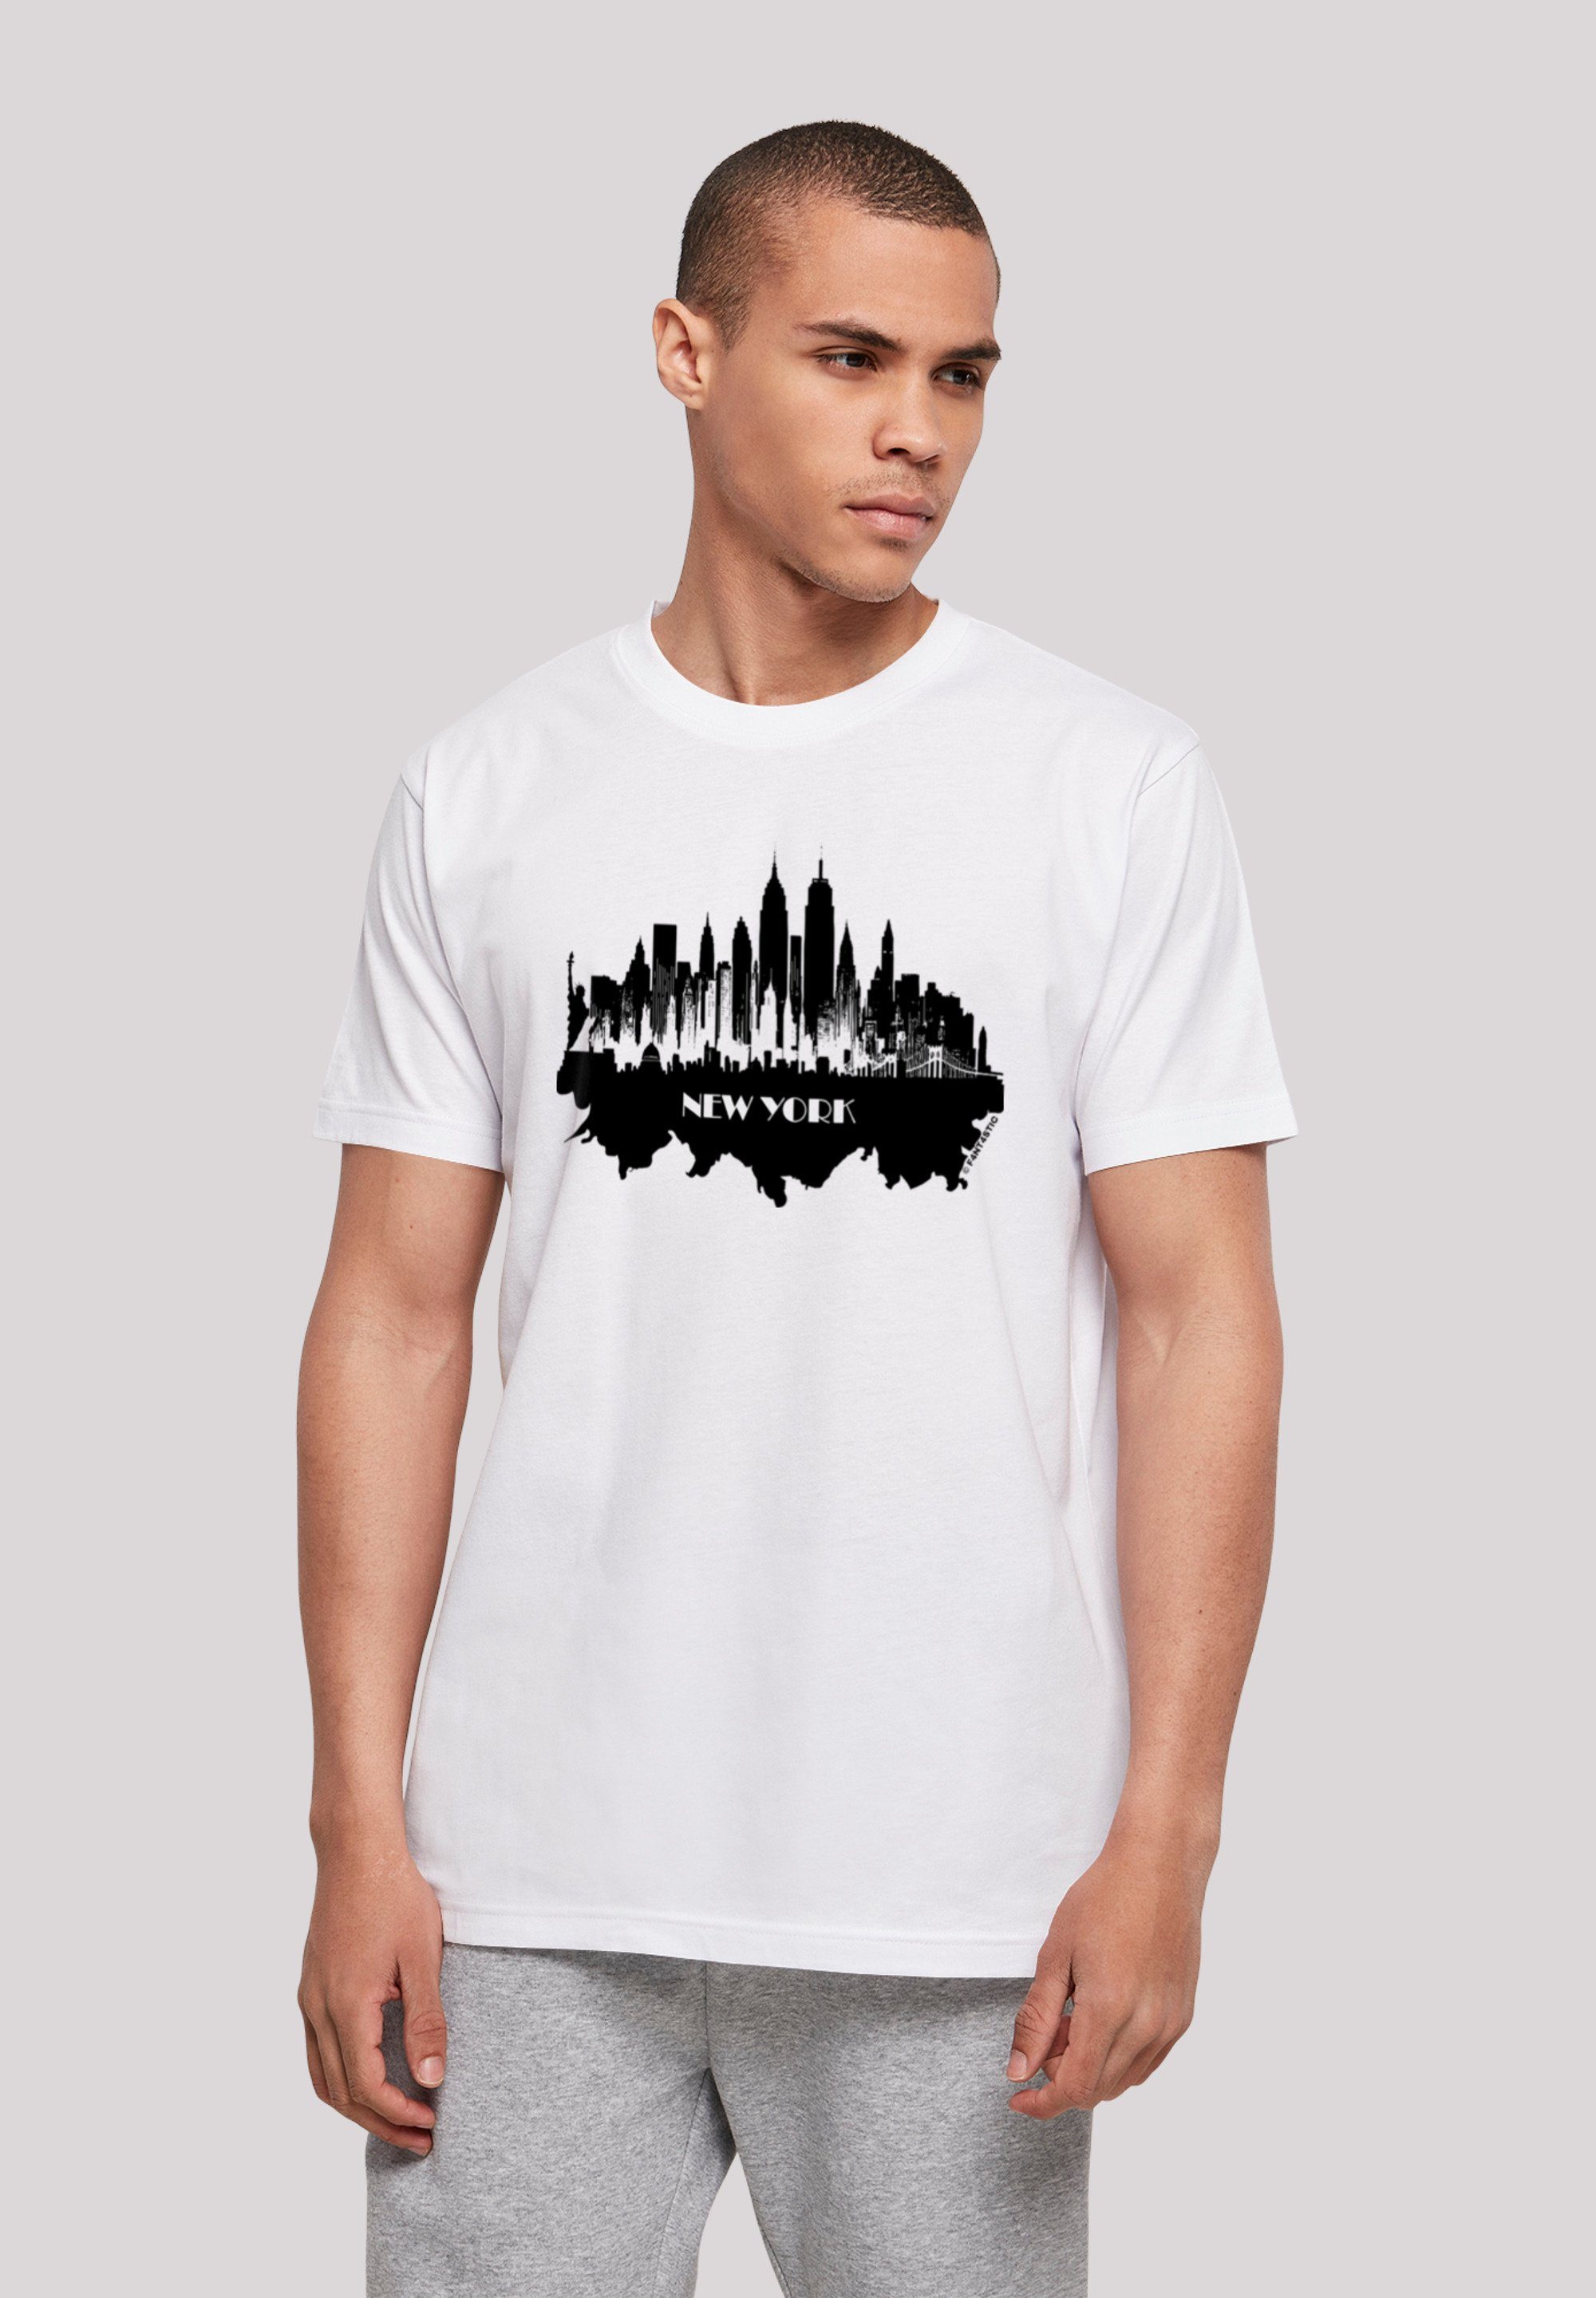 F4NT4STIC T-Shirt Cities Collection - New York skyline Print, Rippbündchen  am Hals und Doppelnähte am Saum